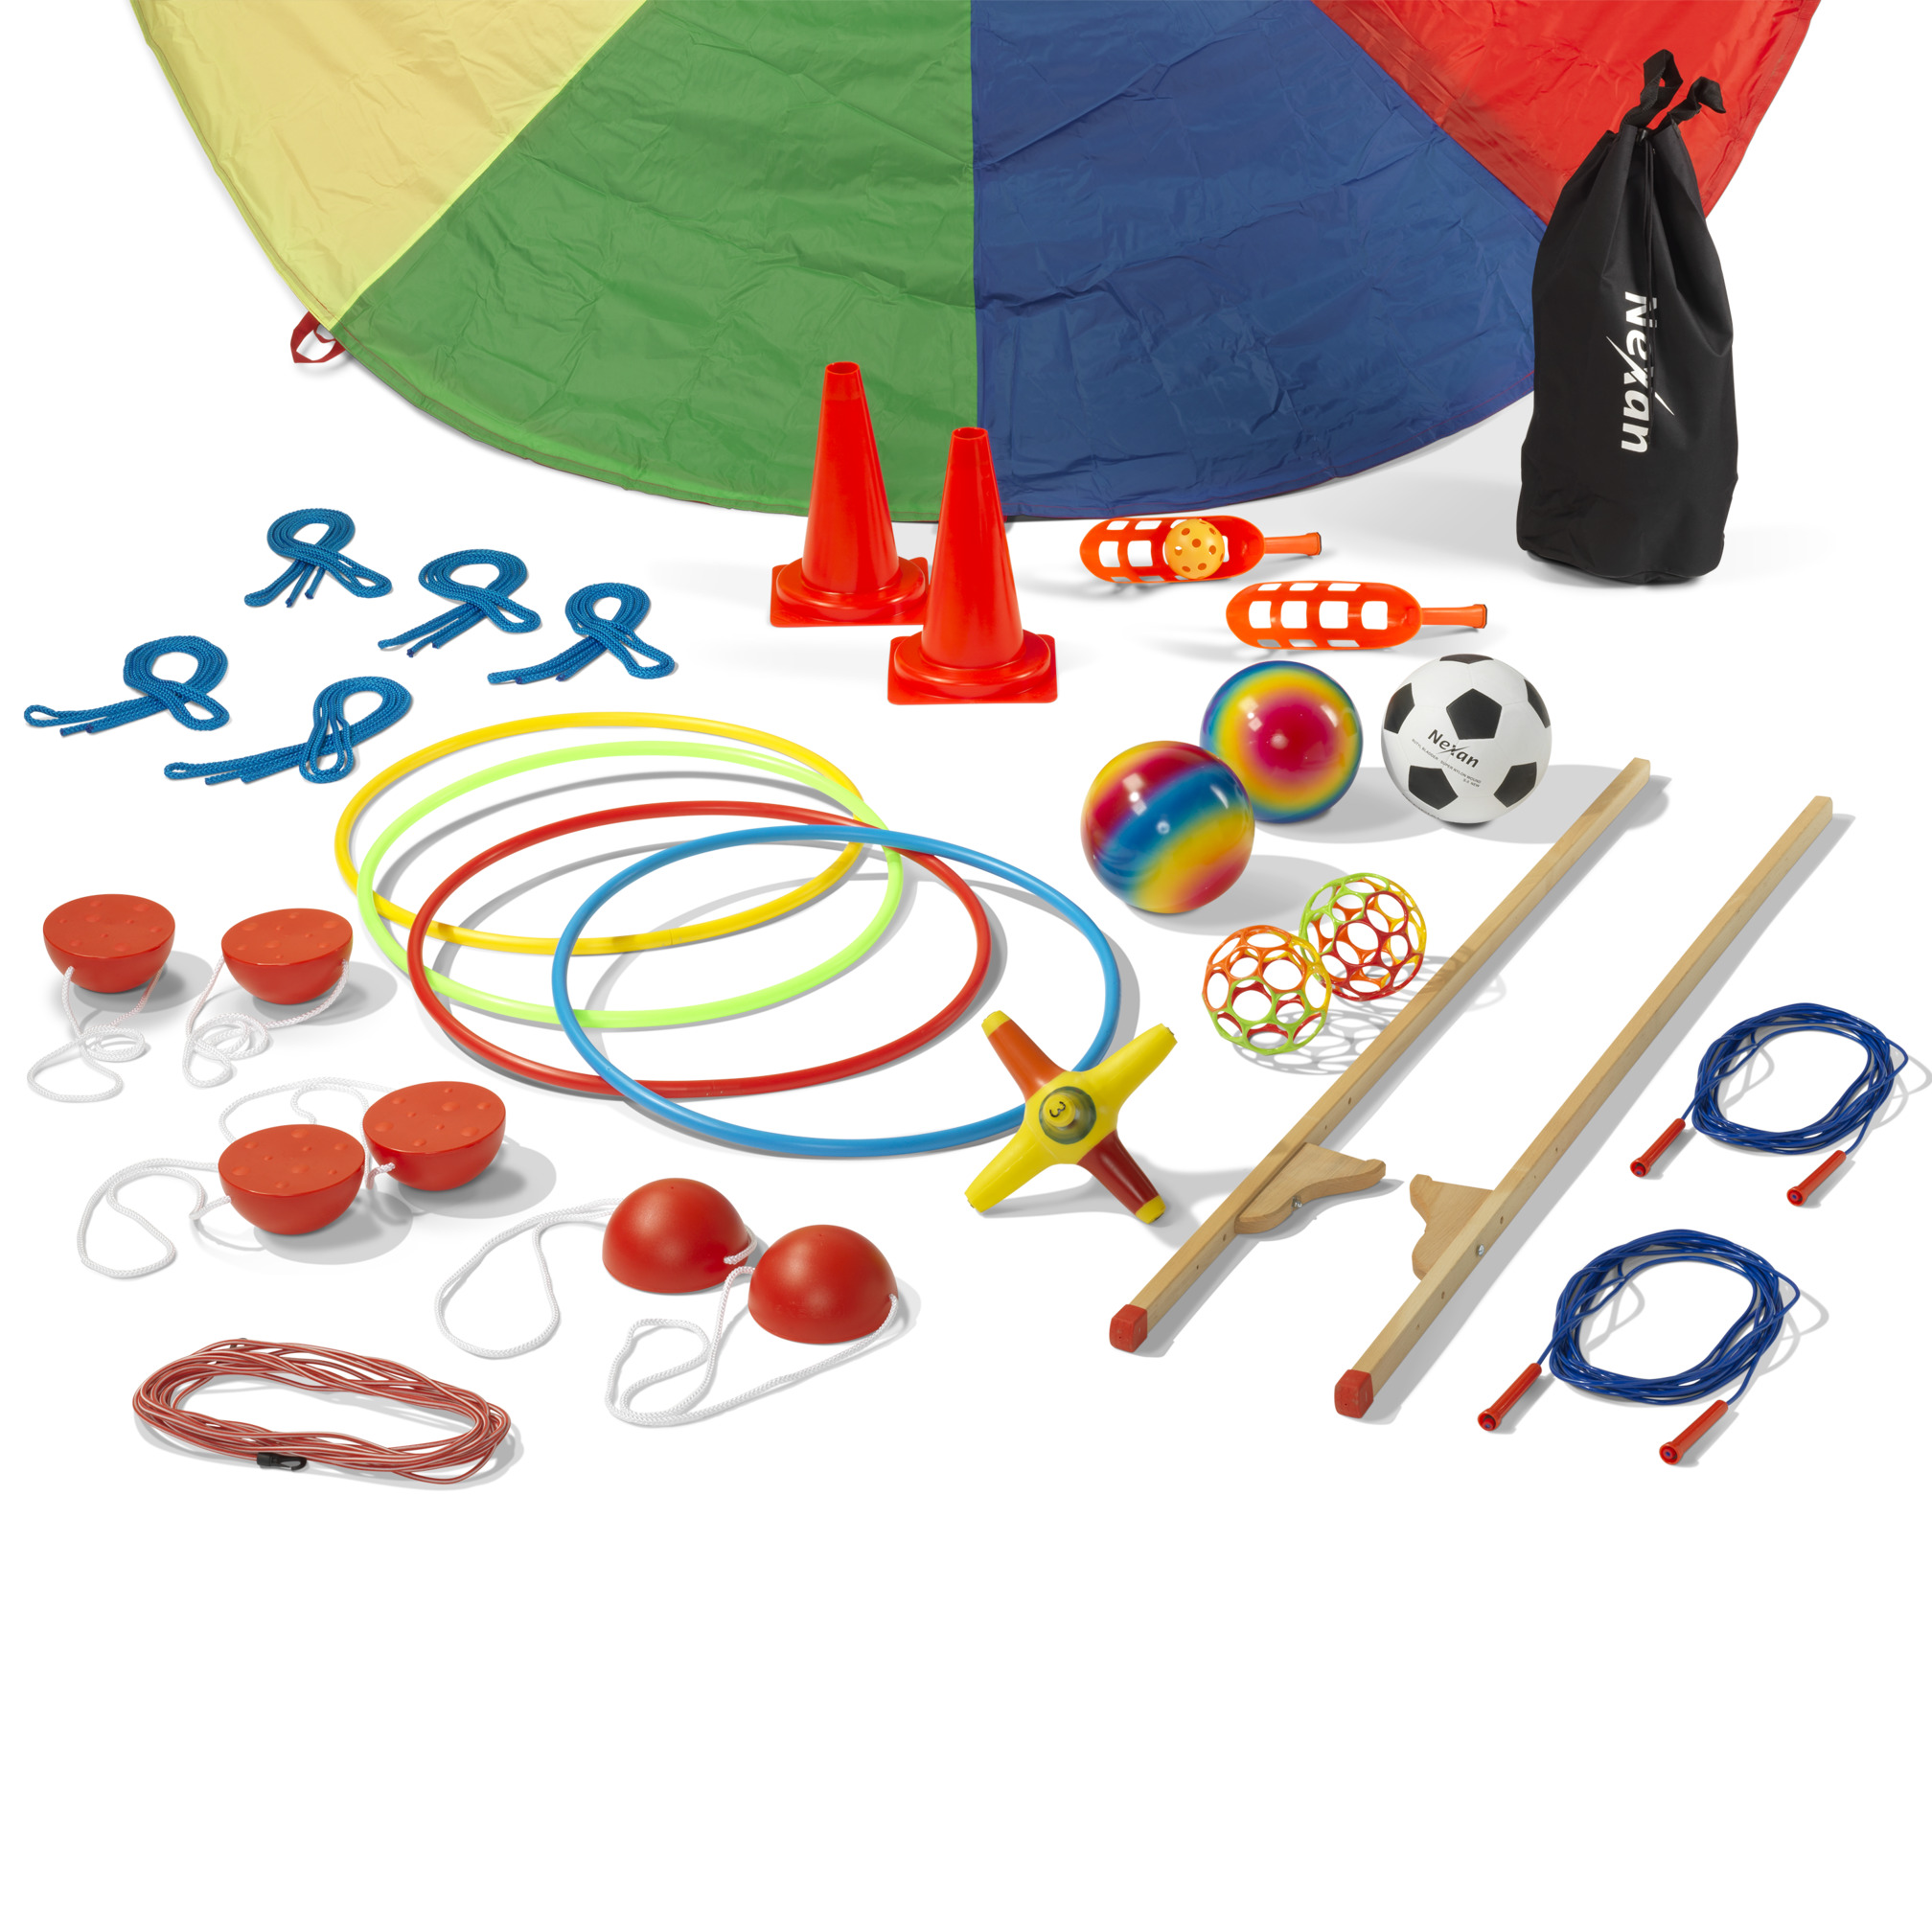 Value-for-money set of primary school playground items